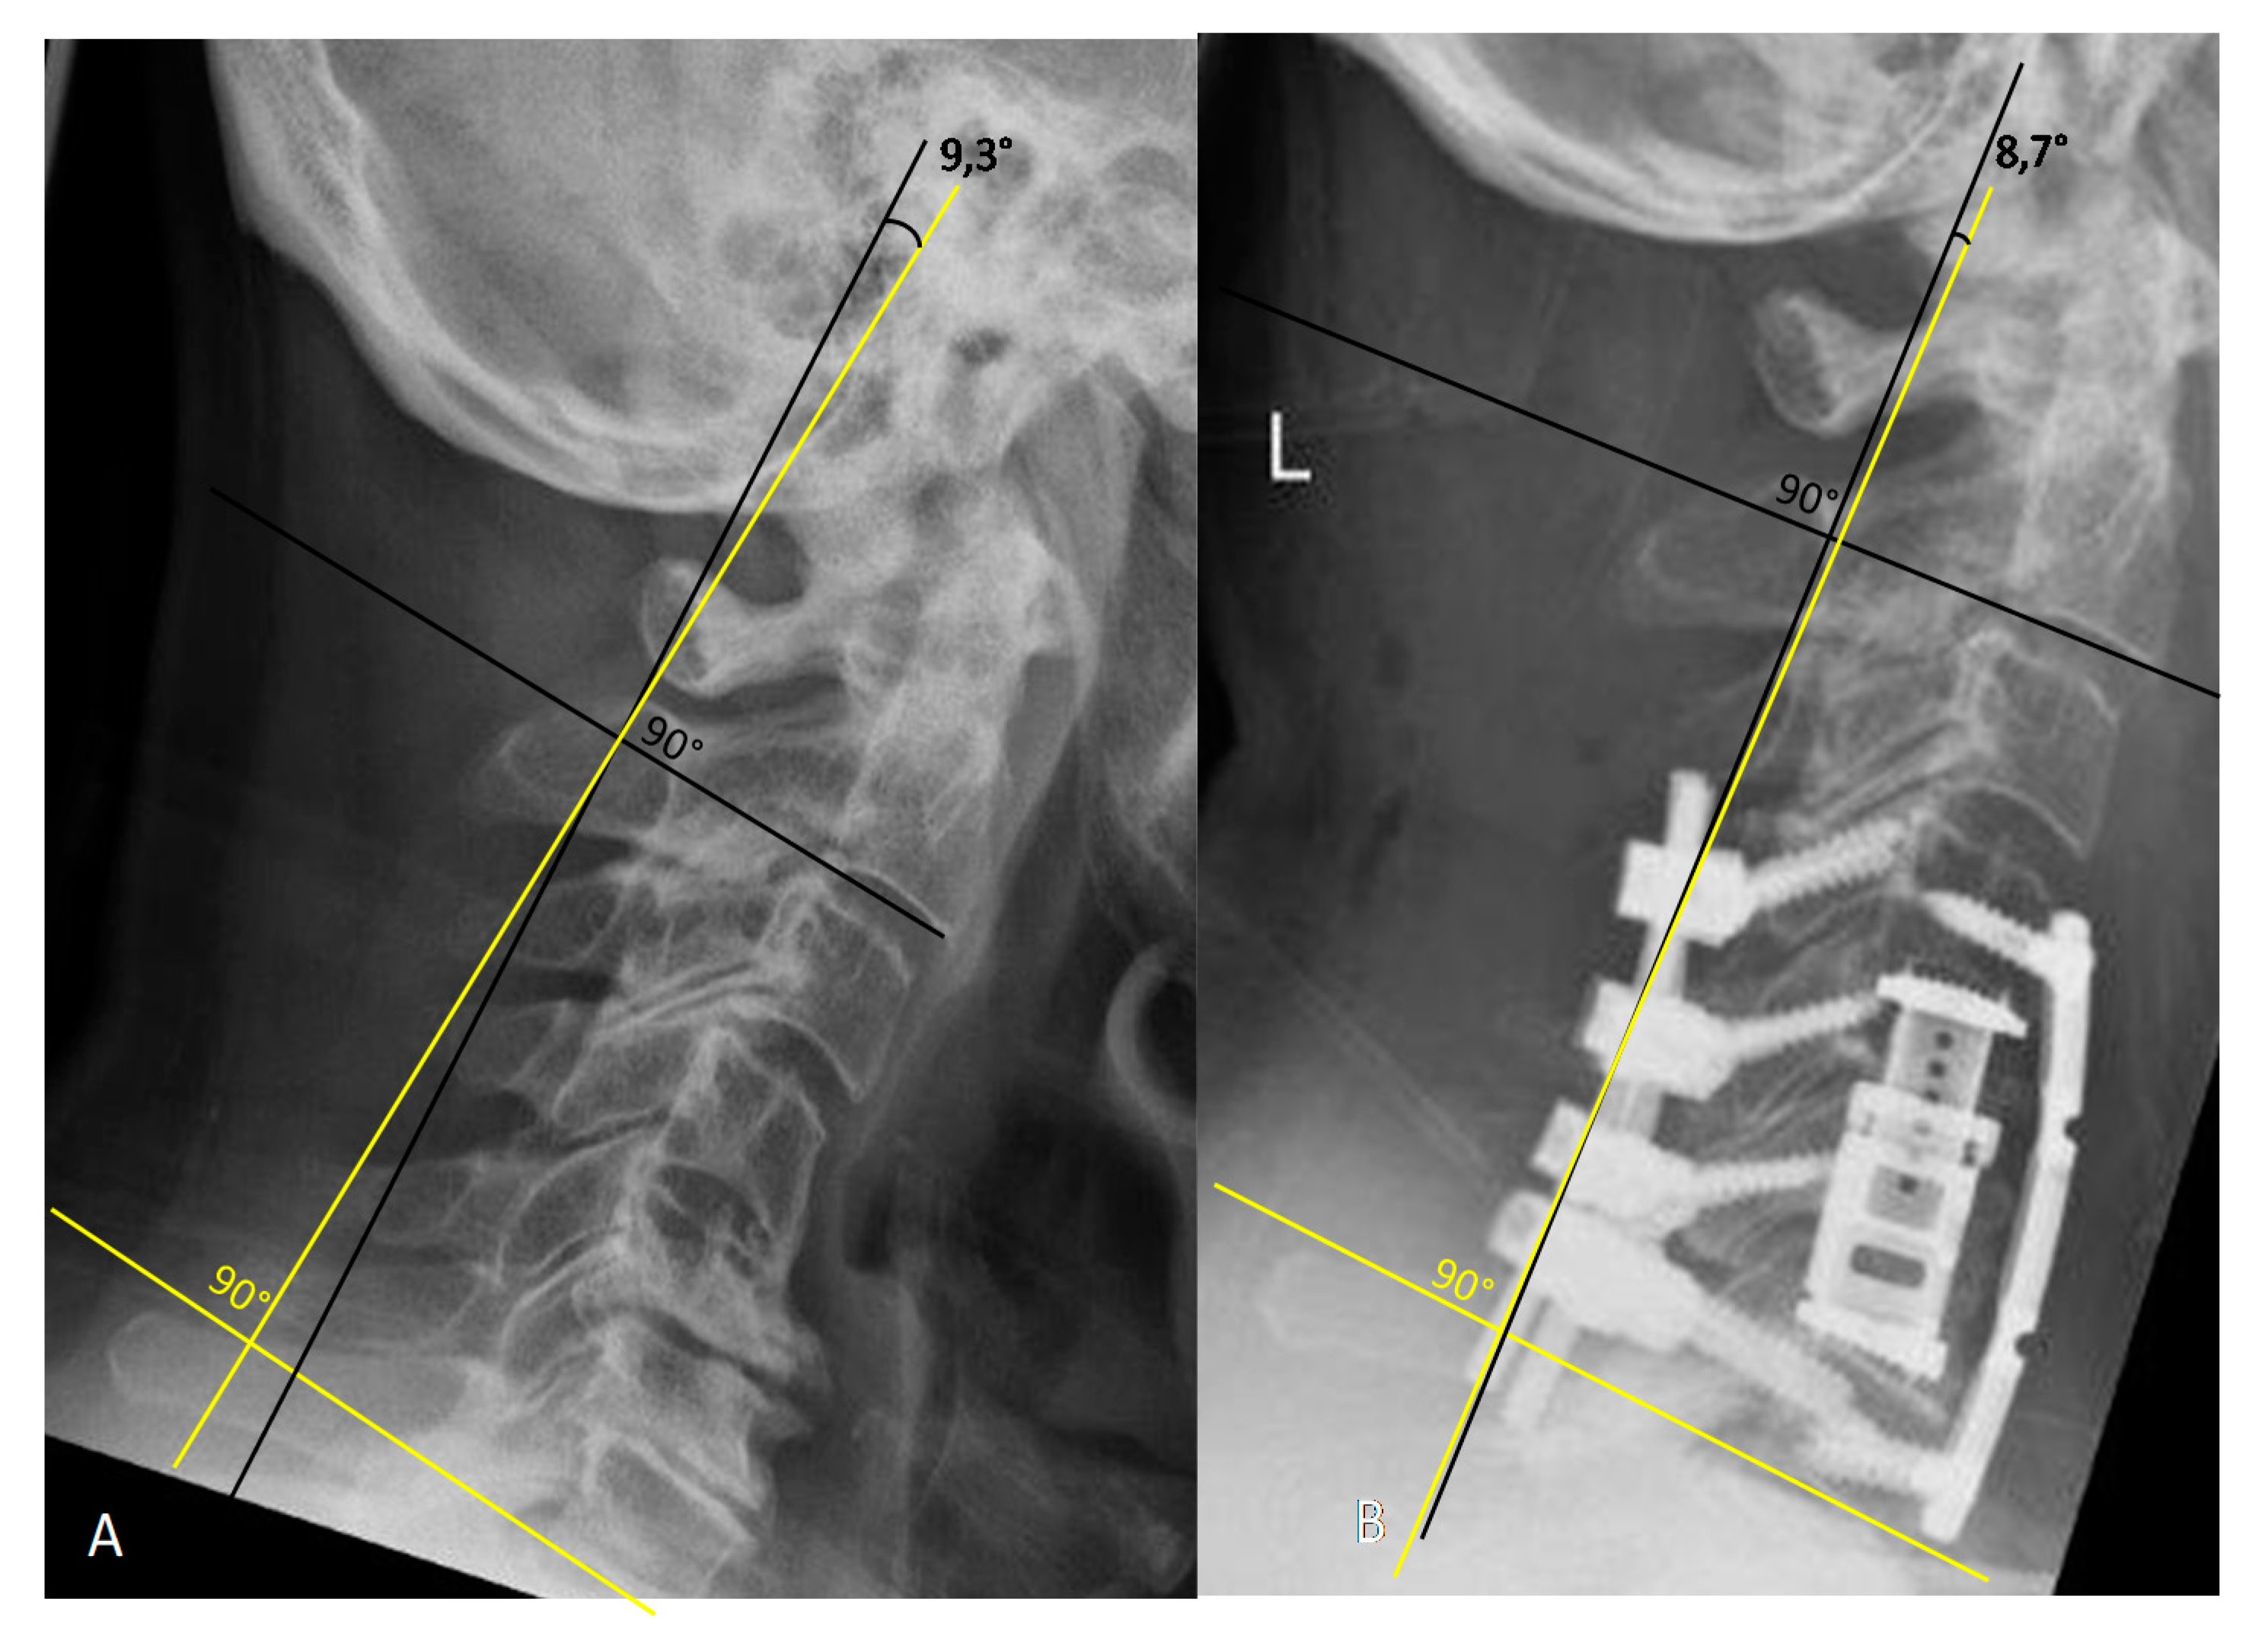 Spine - CVJ and Subaxial Cervical spine